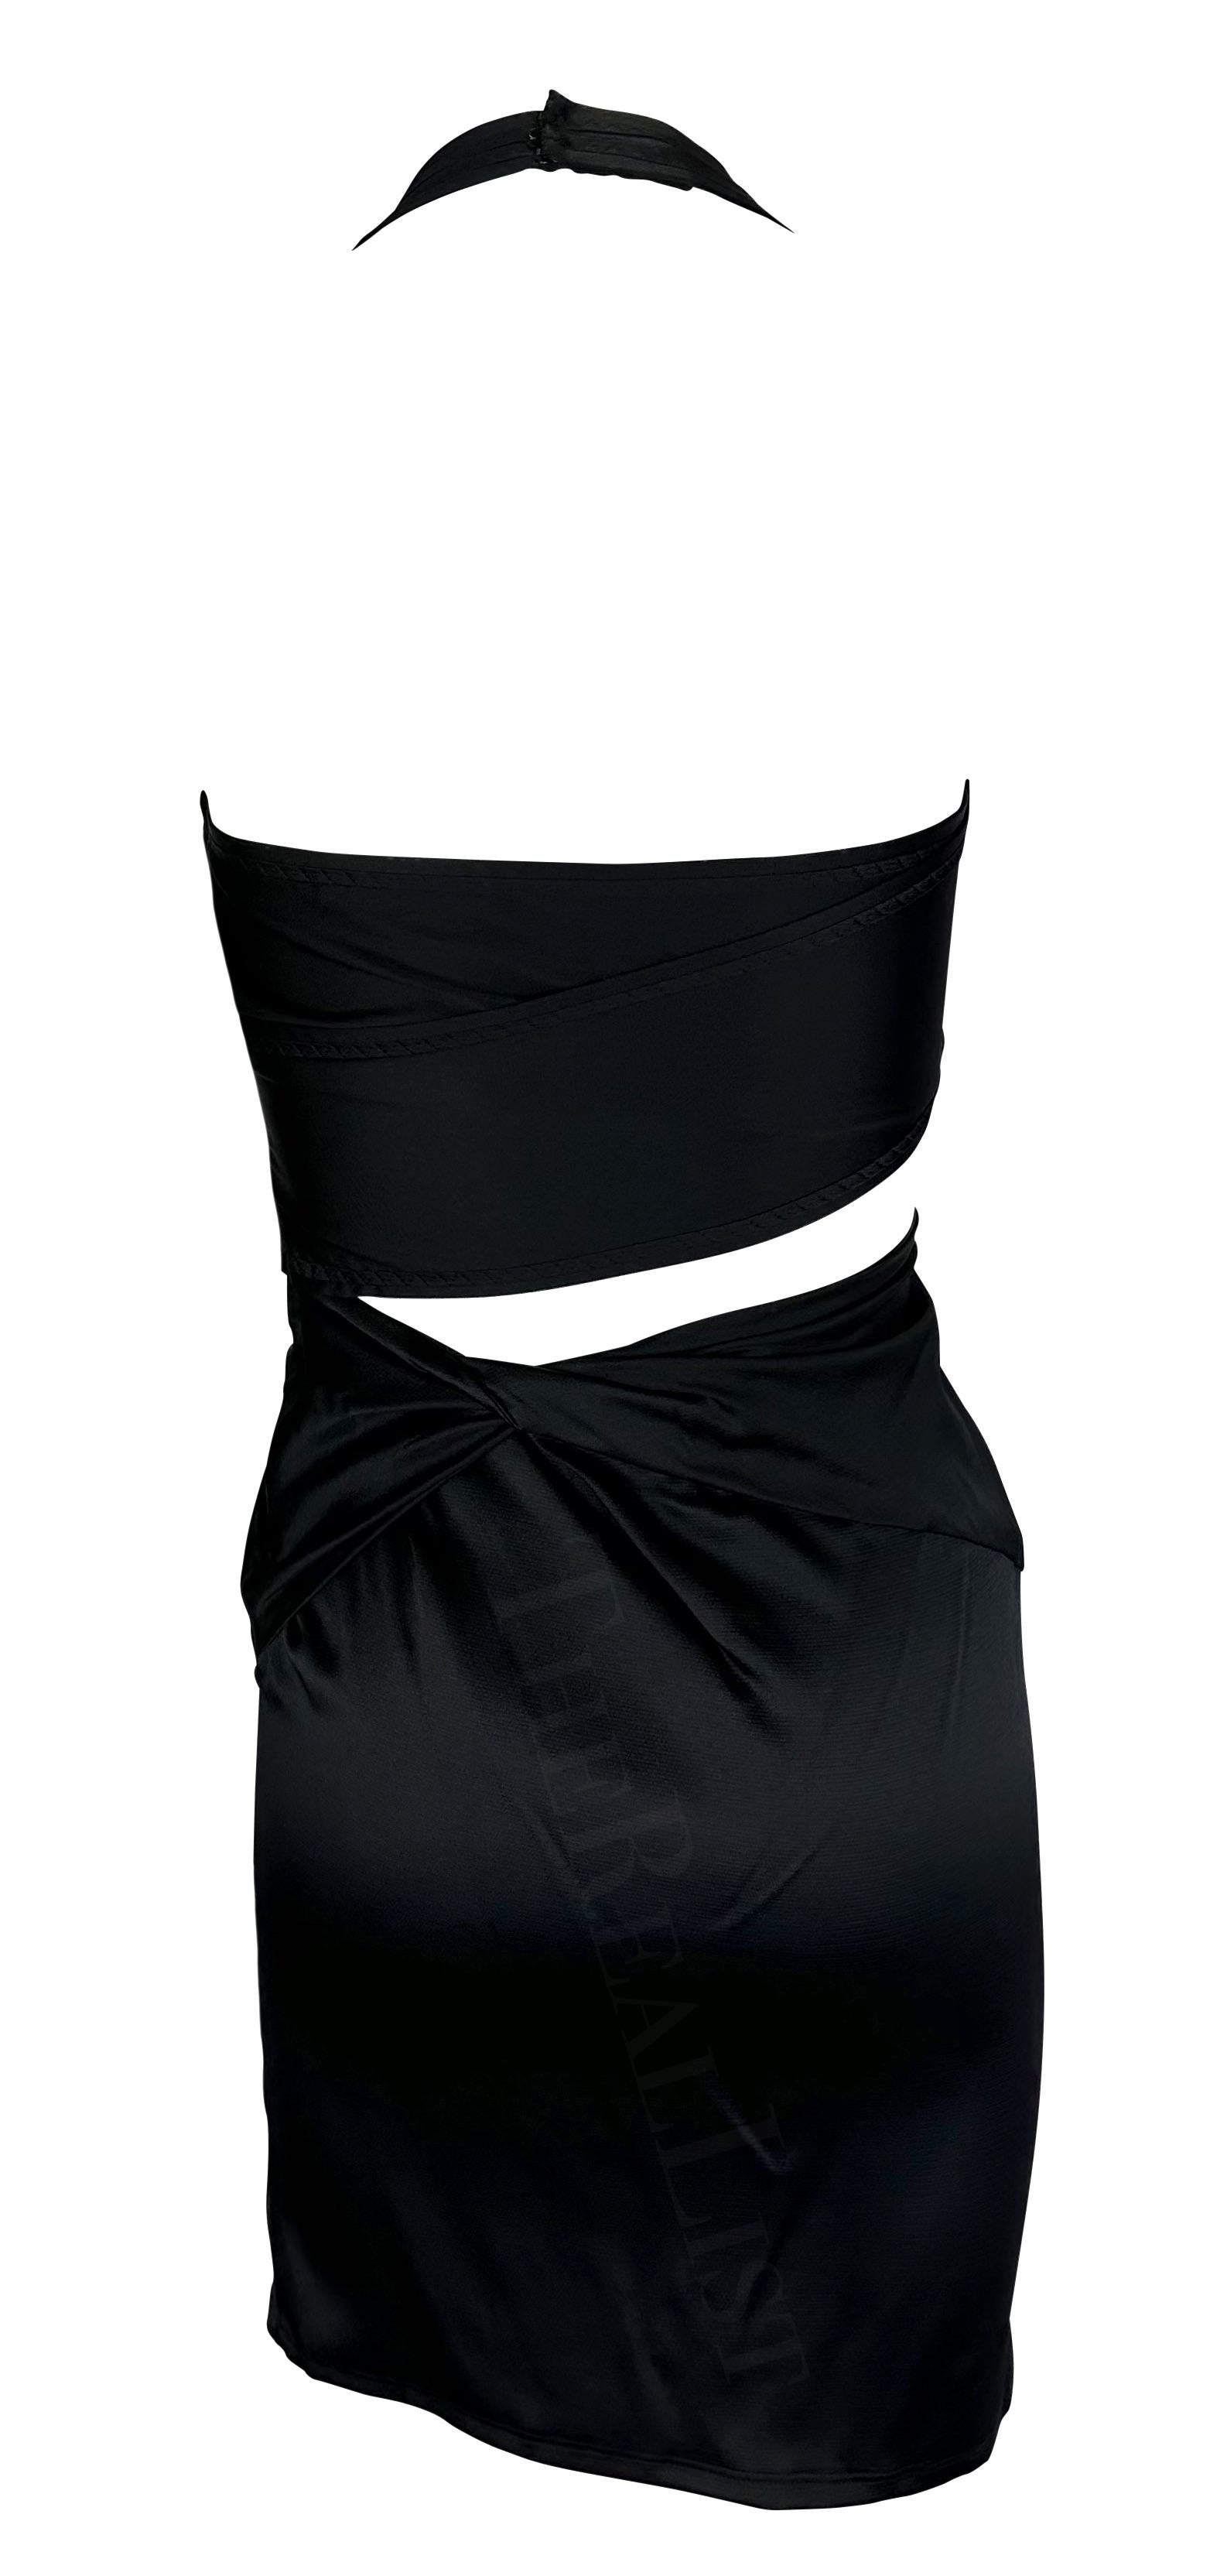 Women's S/S 2005 Gucci Black Strap Cut Out Halter Neck Mini Dress For Sale